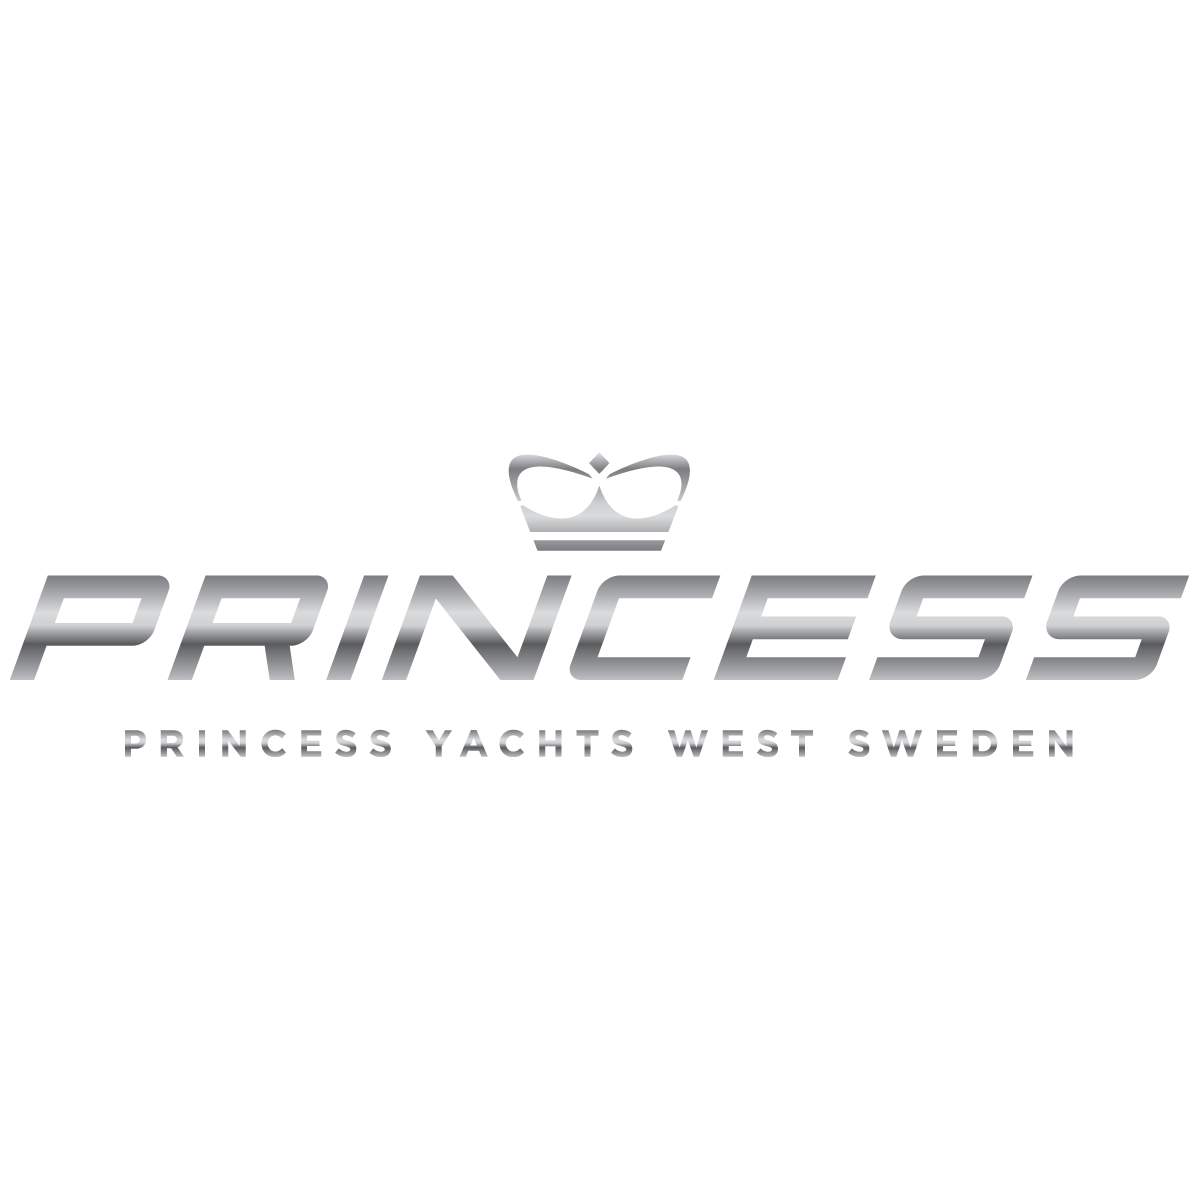 princess yachts west sweden ab